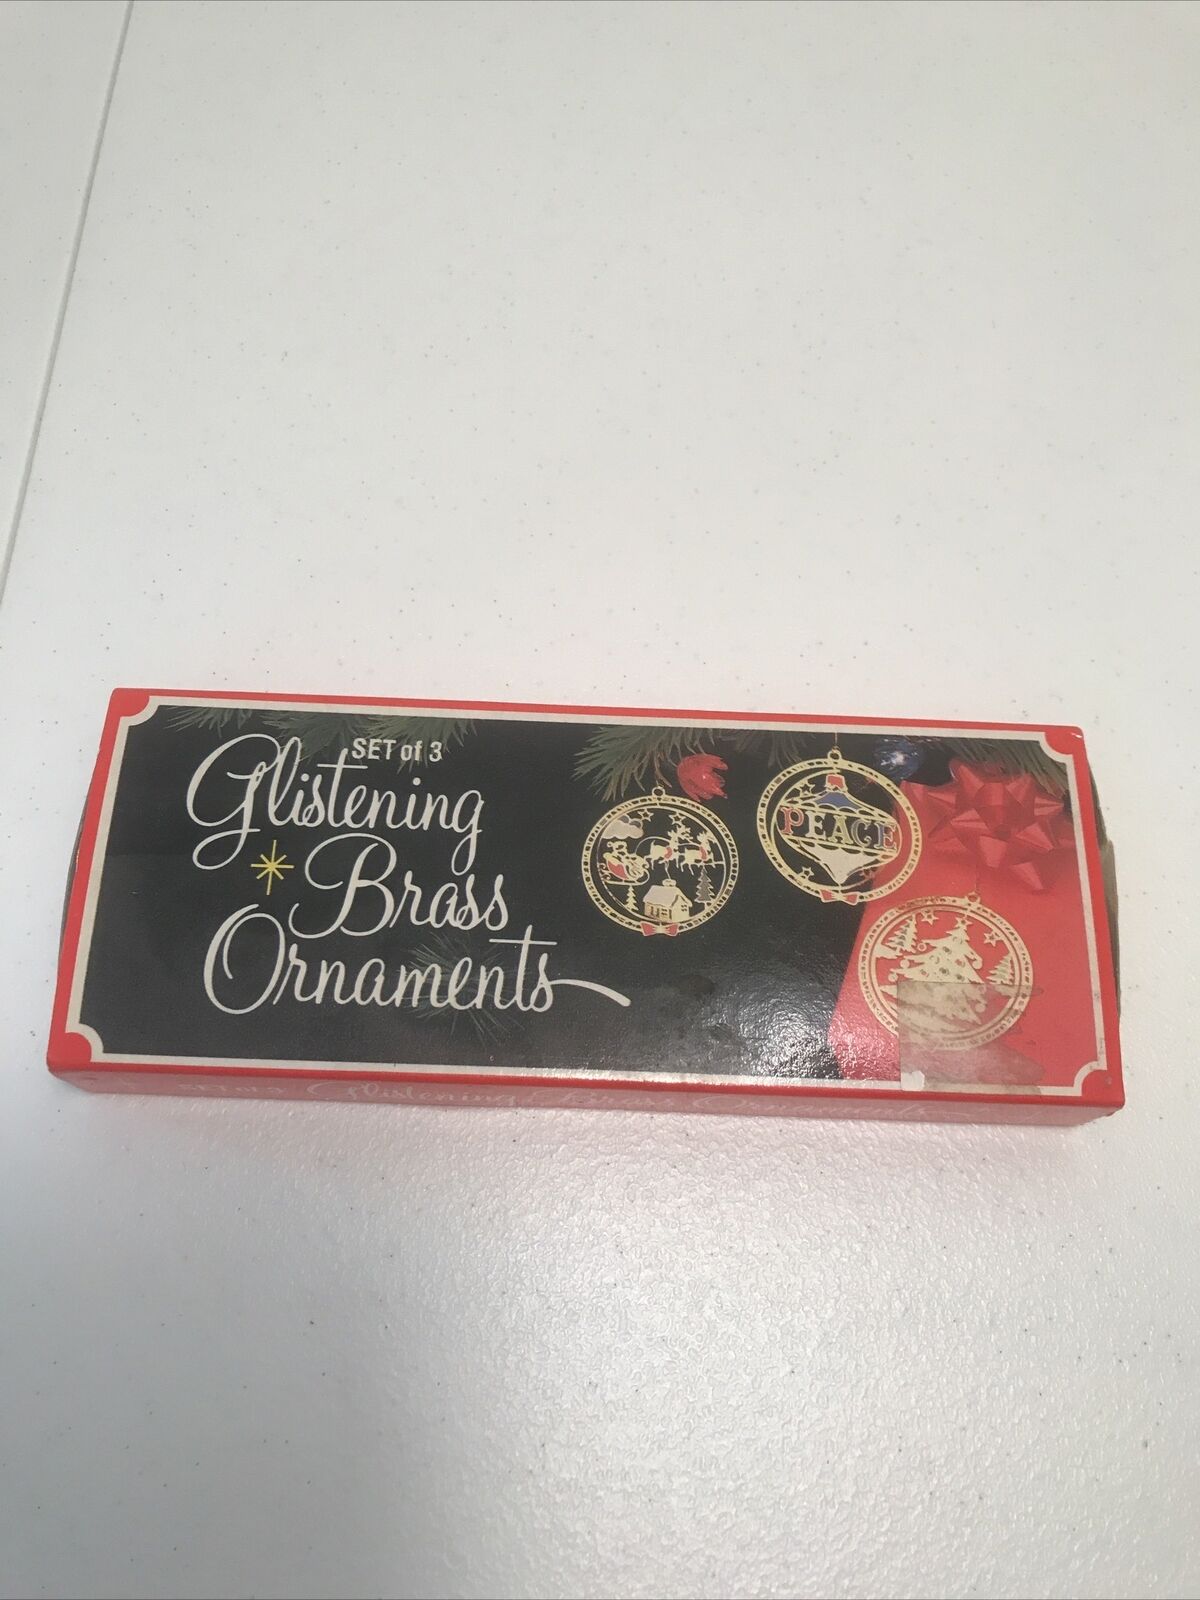 Vintage 1987 Set of 3 Glistening Brass Christmas Ornaments In Original Box